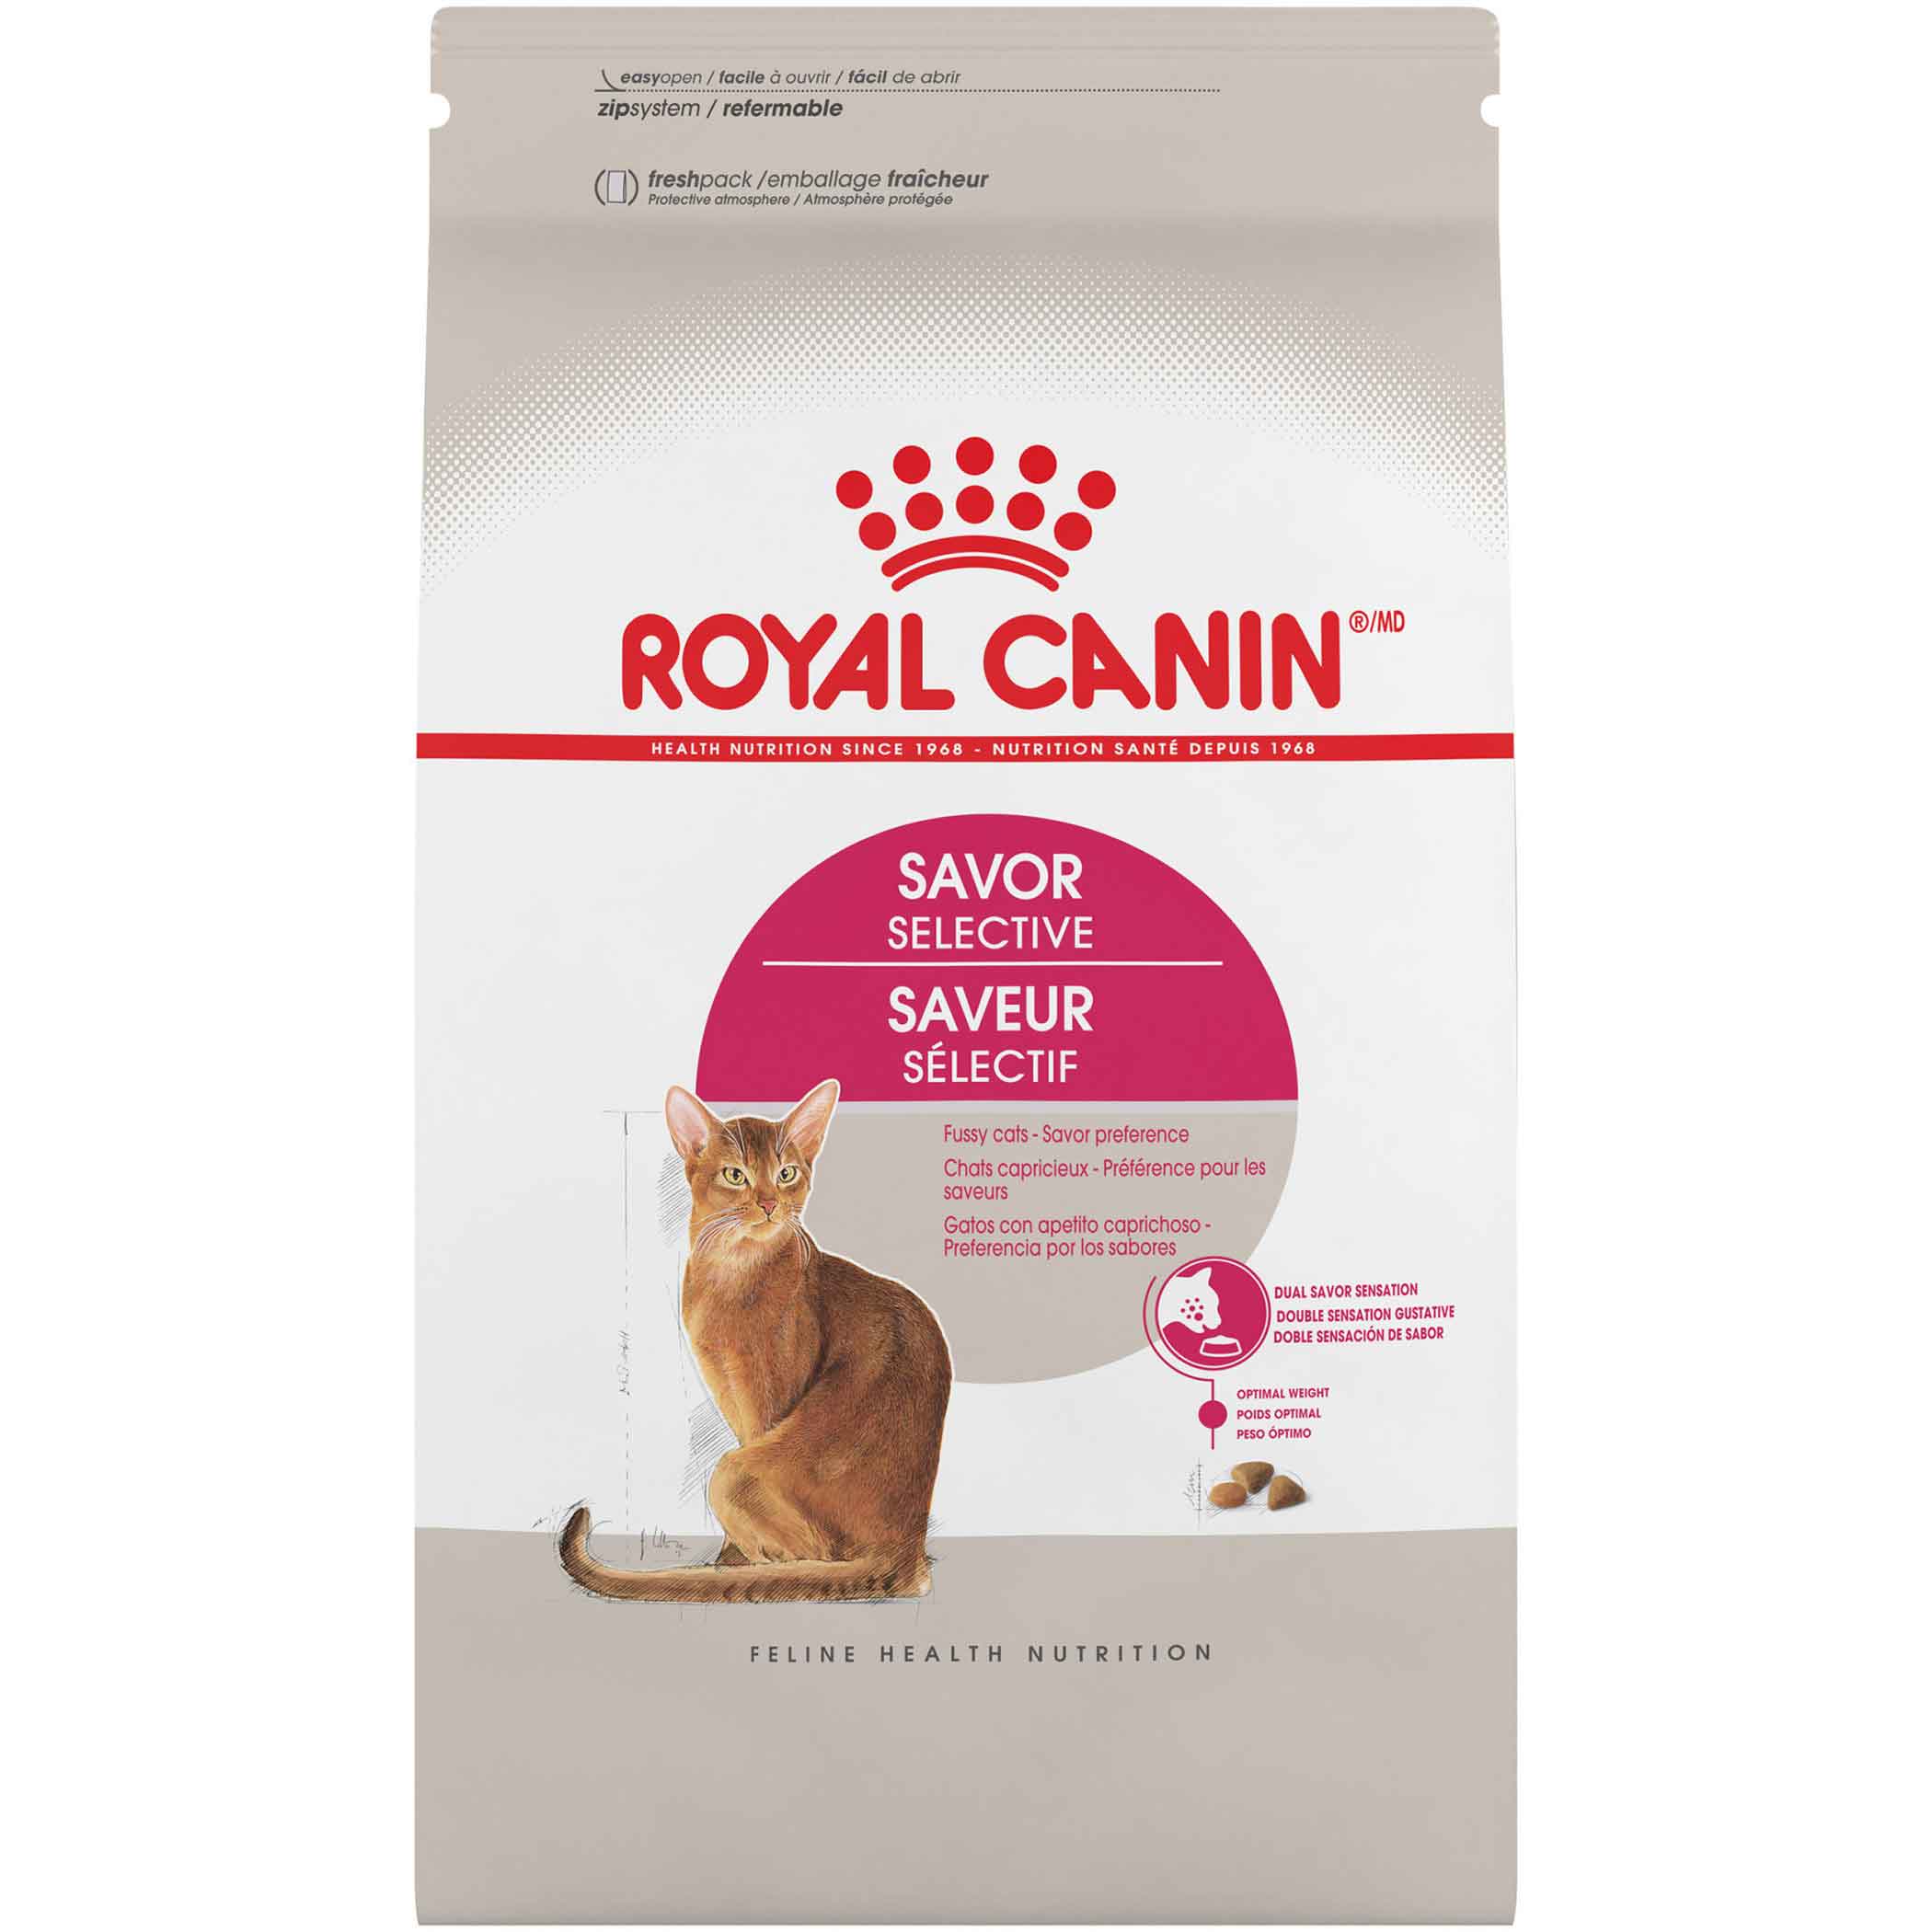 Royal Canin Savor Selective Adult Dry Cat Food, 6 Pounds